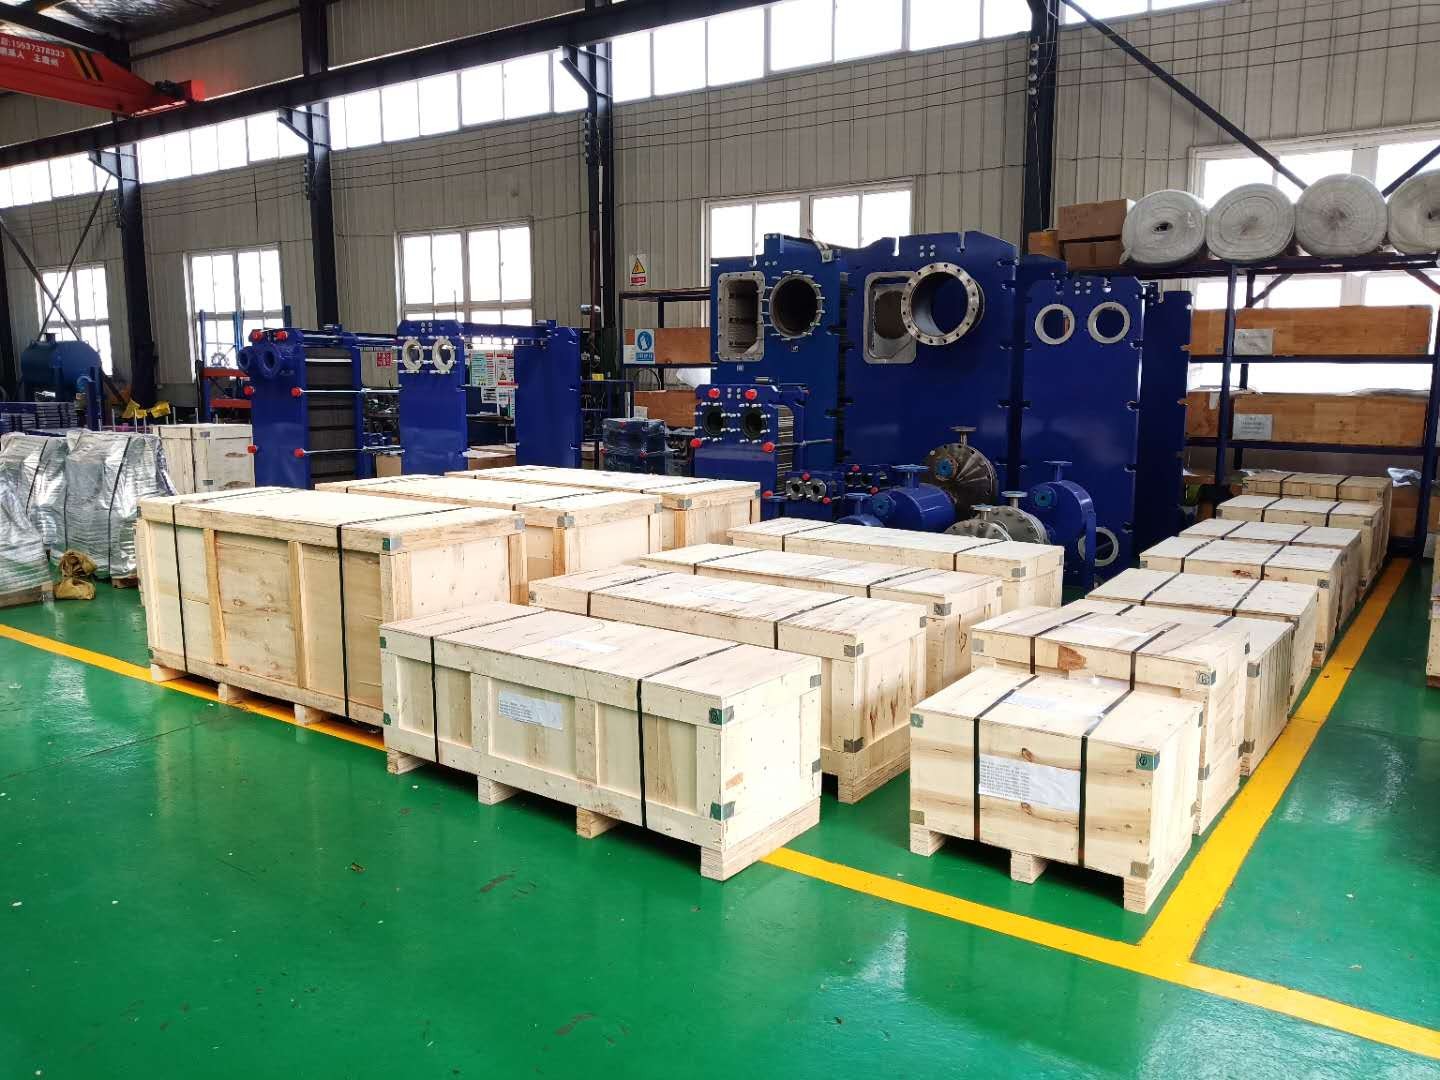 Heat exchanger factory interpretation of China's domestic detachable plate heat exchanger